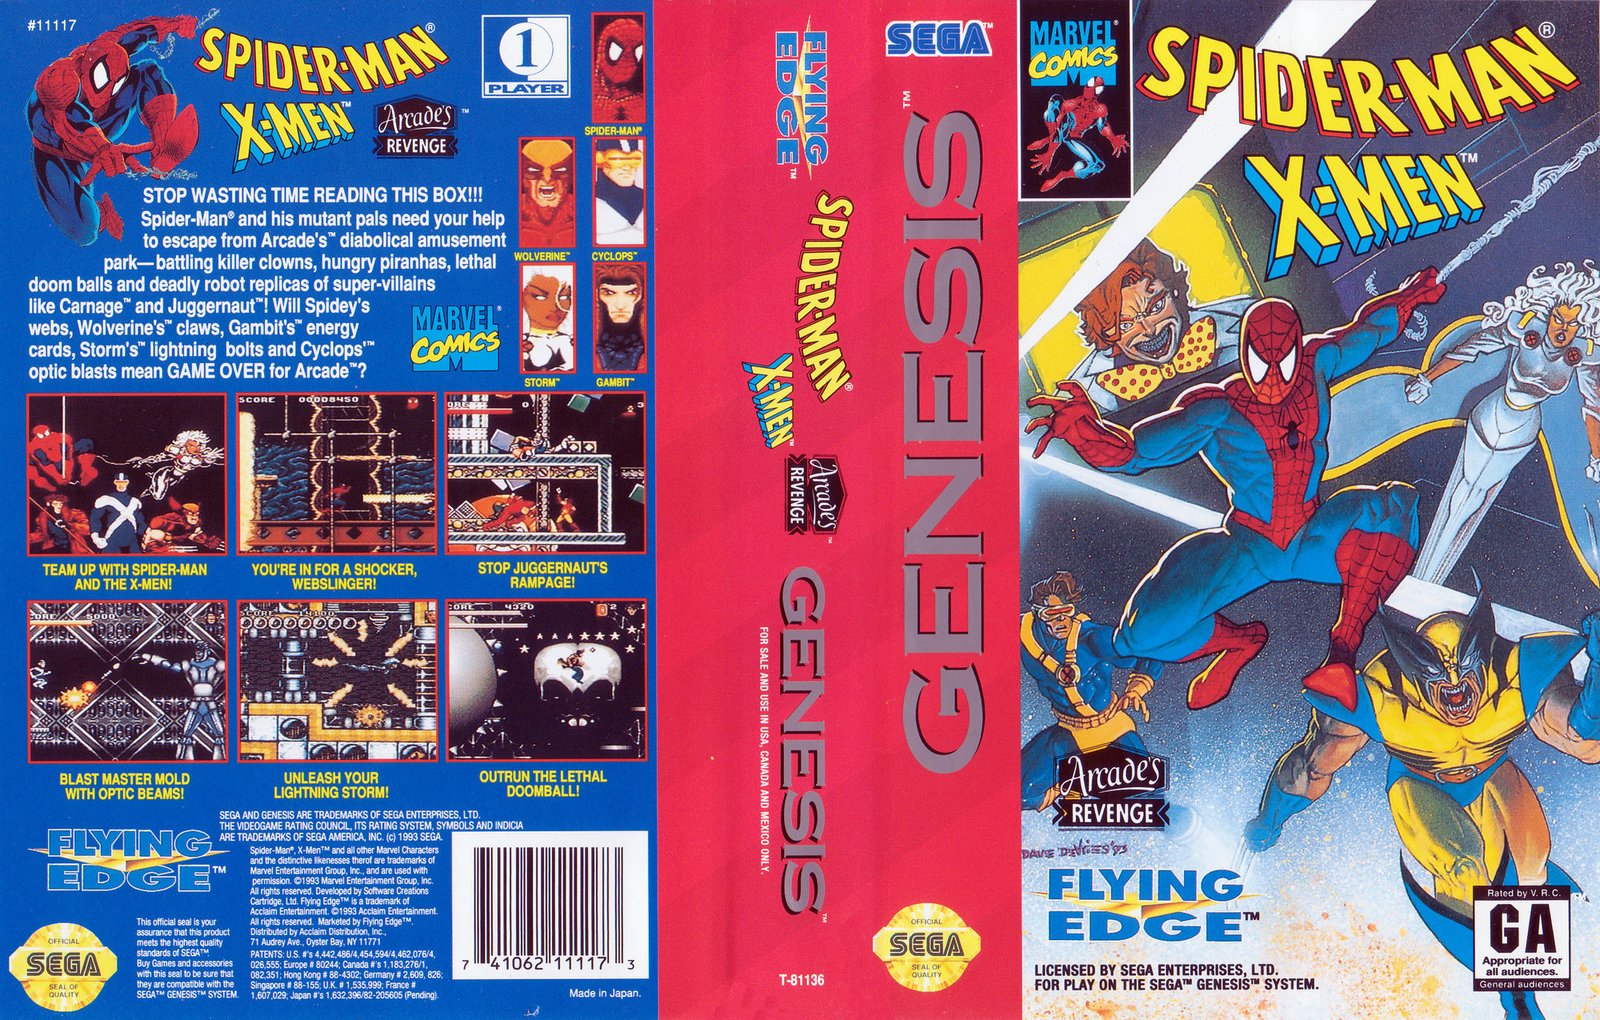 Sega обложка Spider-man x men. Spider man Sega Mega Drive. Spider man and x men Sega. Sega Spider man русская версия картридж. Lethal company thunder